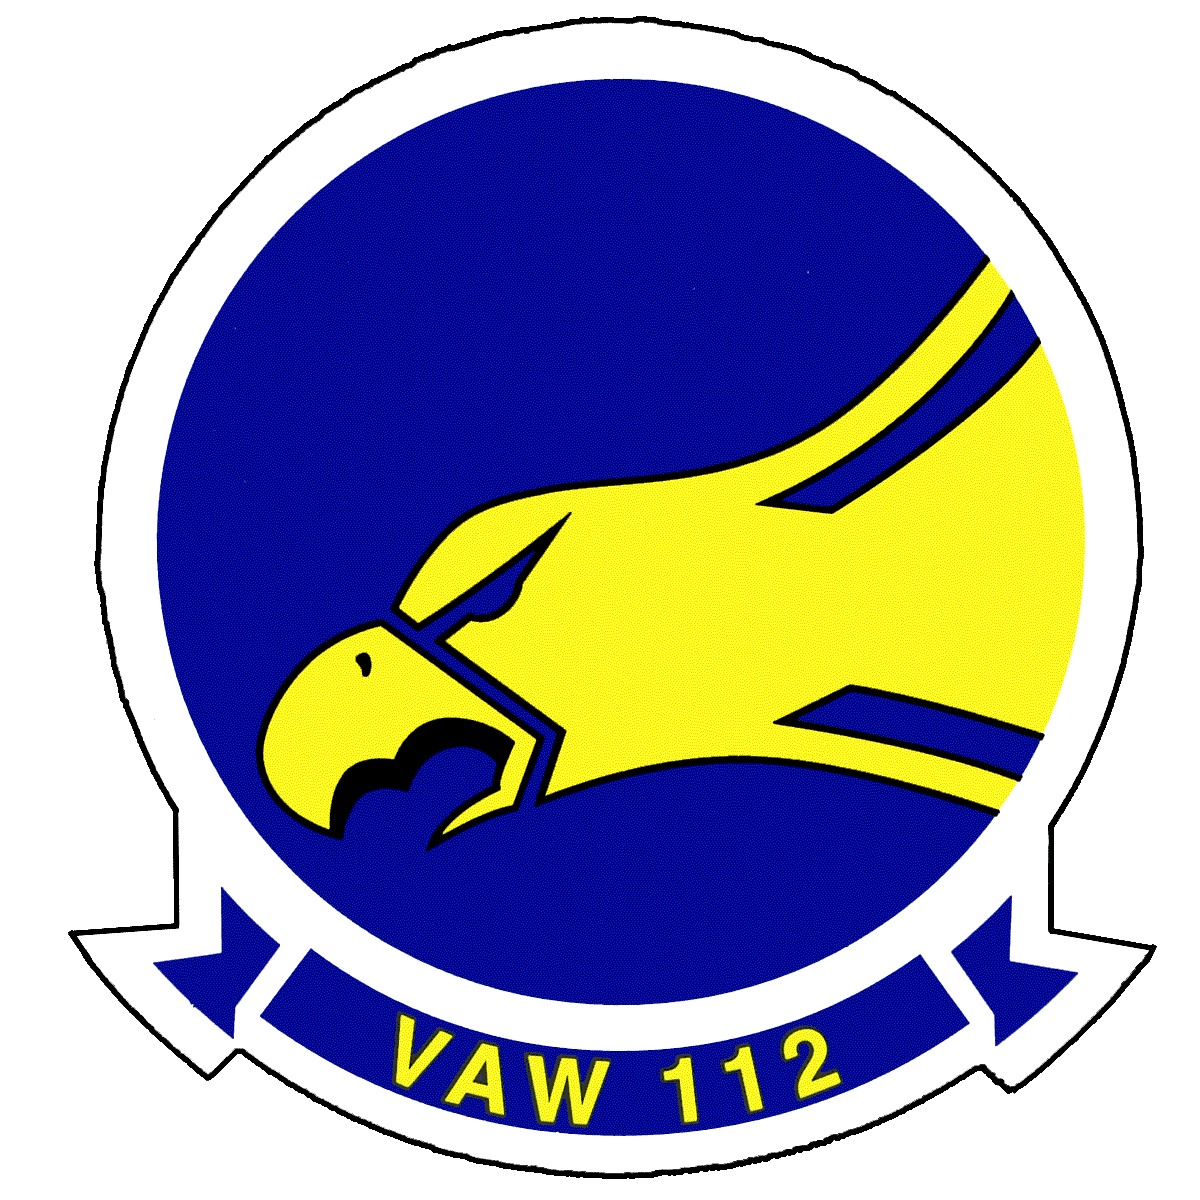 vaw-112-trasp